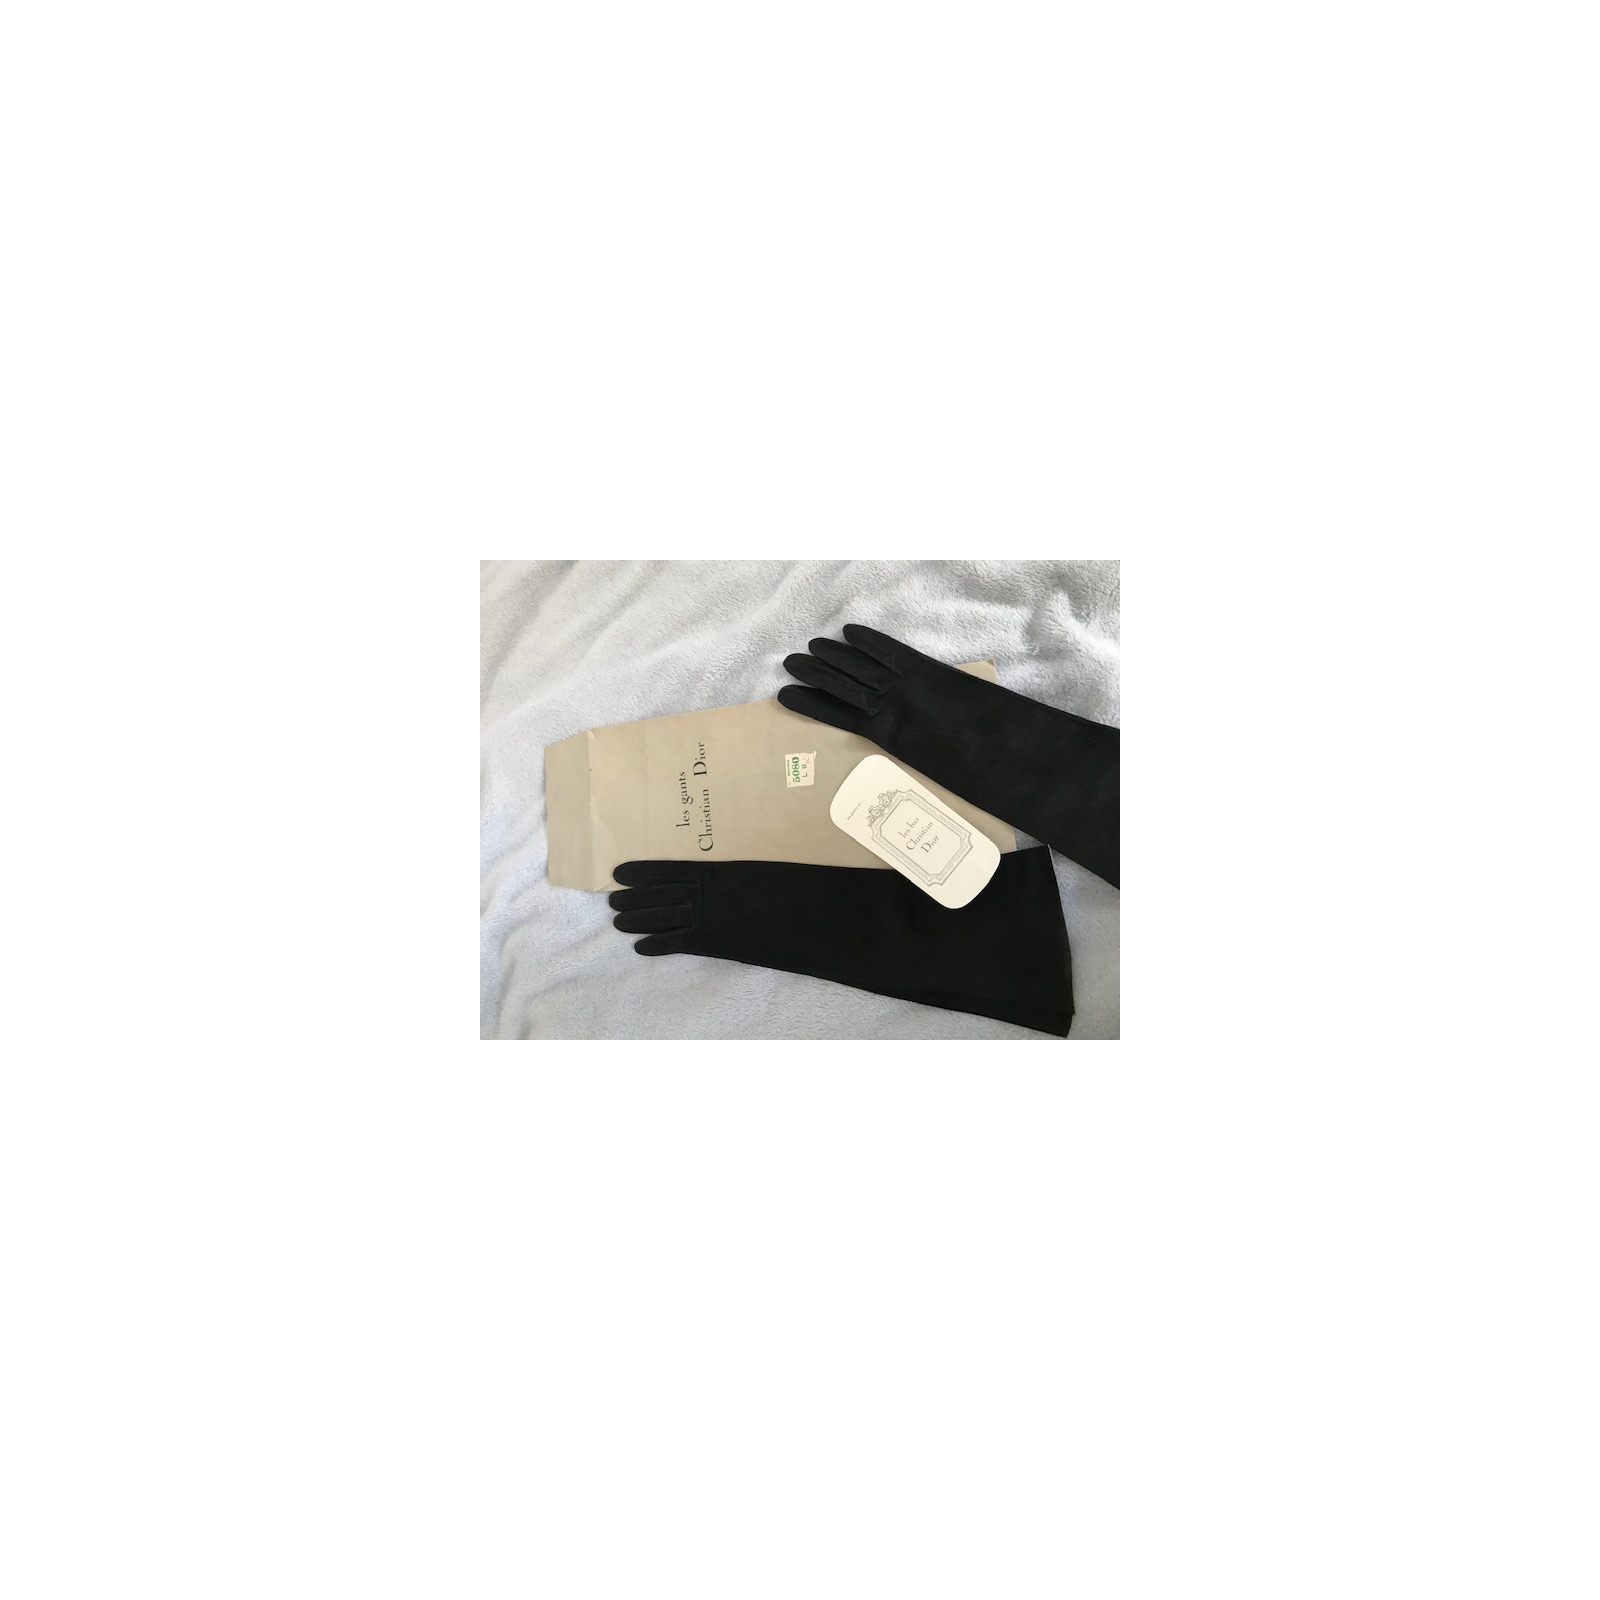 Rękawice skórzane les gants Dior